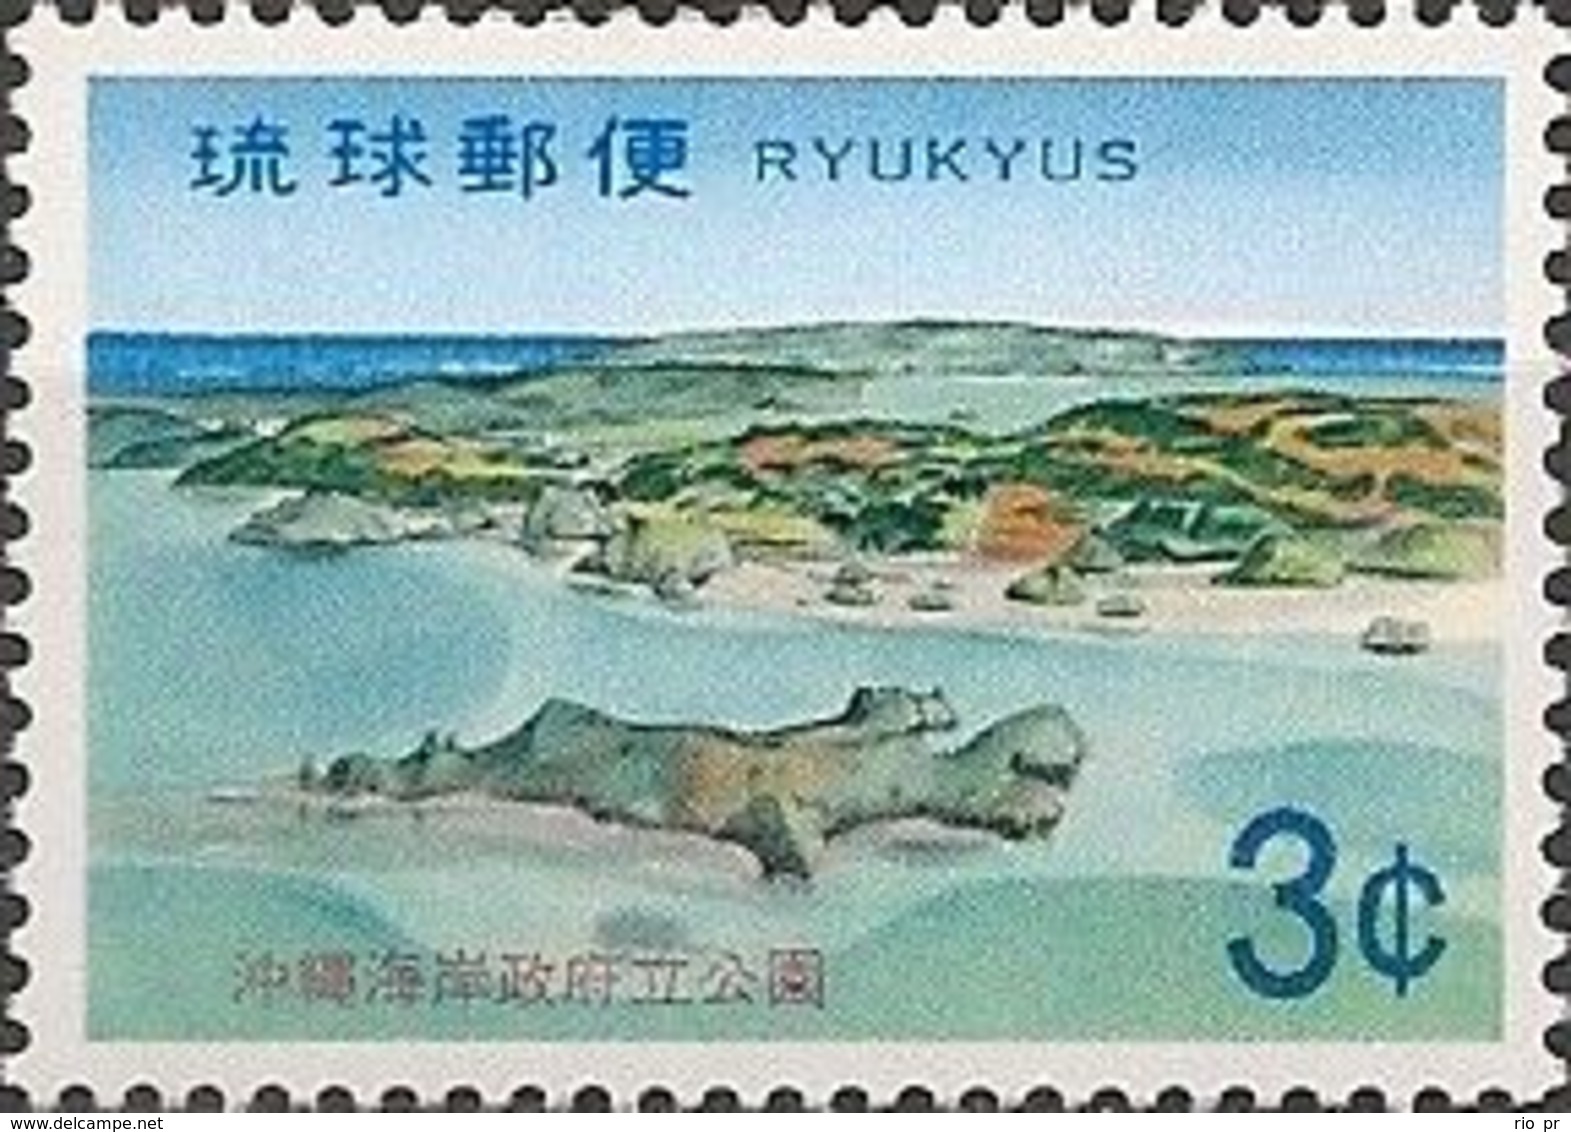 RYUKYU - NATIONAL PARK OF OKINAWA (2nd ISSUE) 1971 - MNH - Riukiu-eilanden